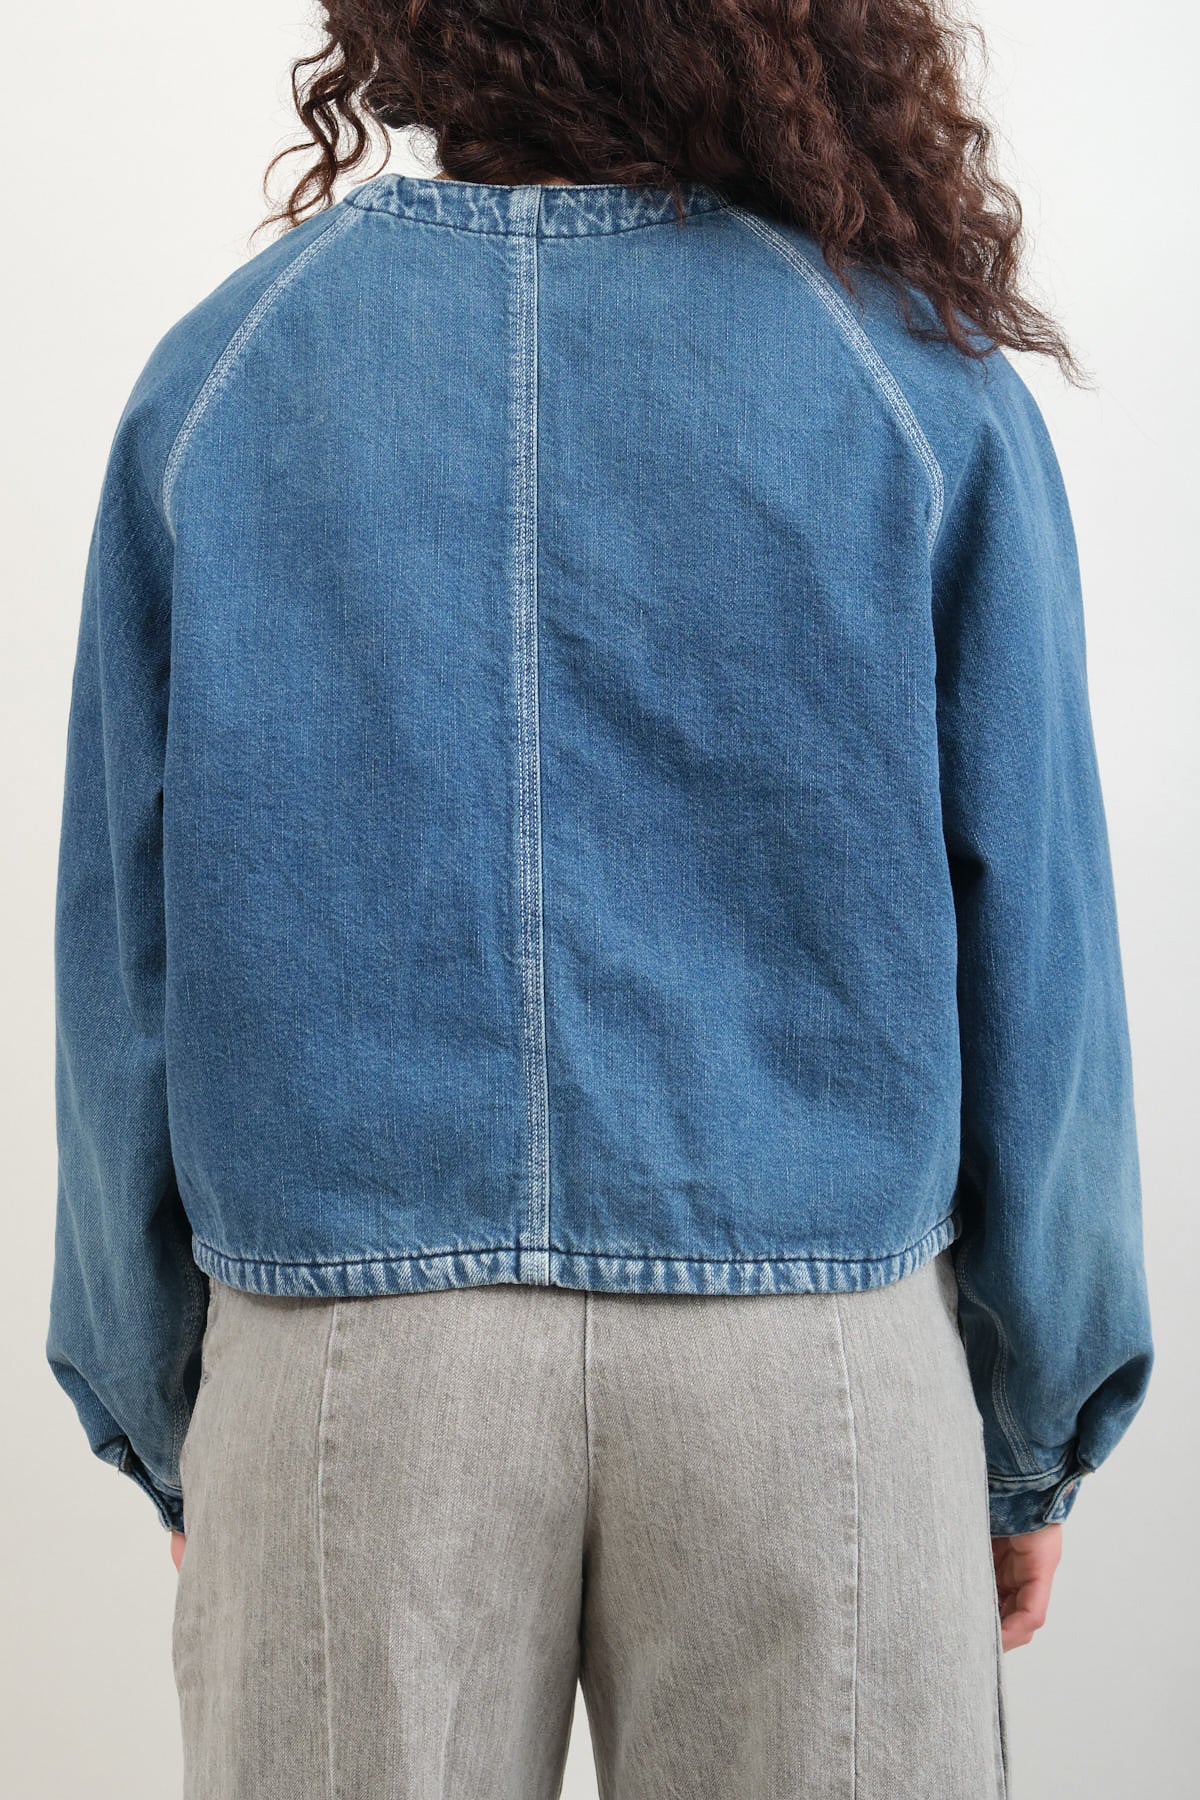 Kapital 11.5 oz denim jacket with fleece blanket lining